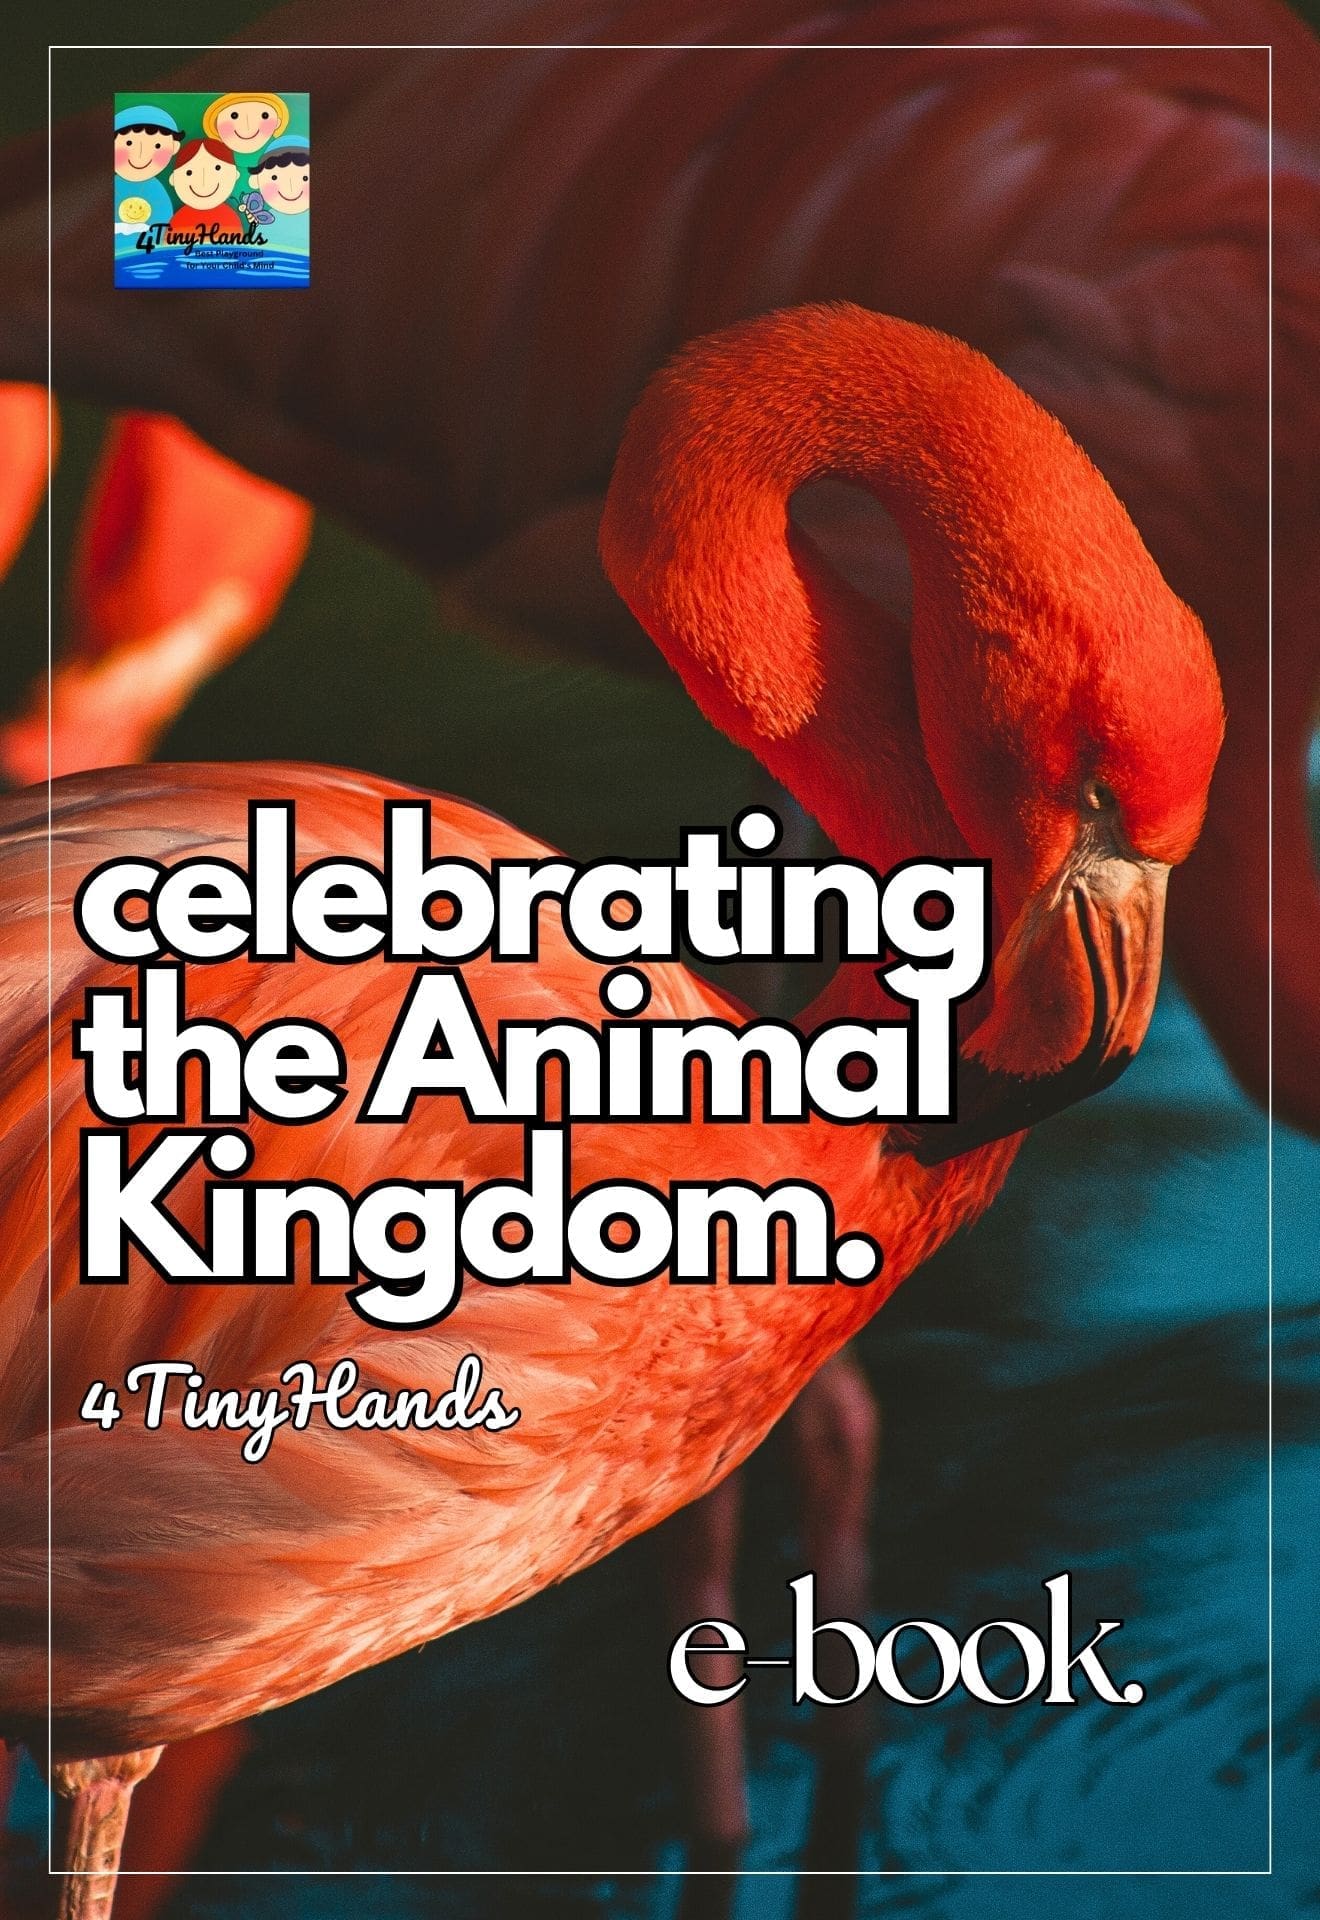 Children Of The World United: Celebrating The Animal Kingdom eBook